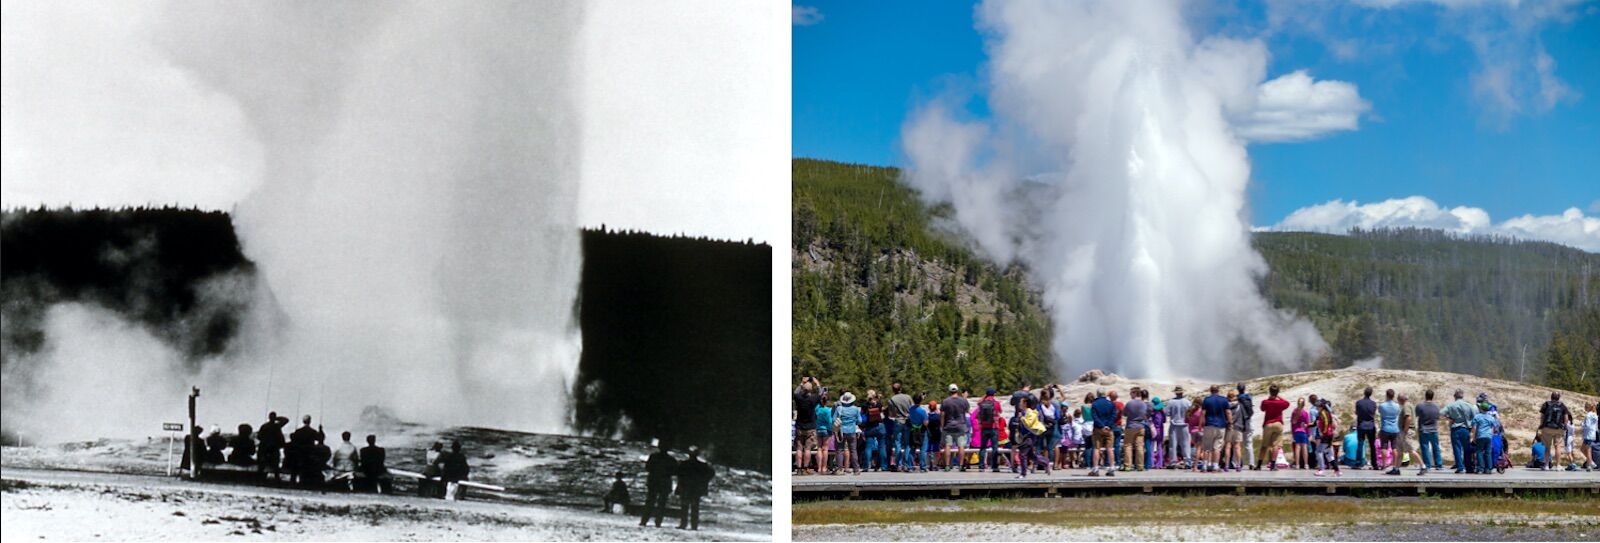 Old Faithful_Yellowstone National Park yellowstone history